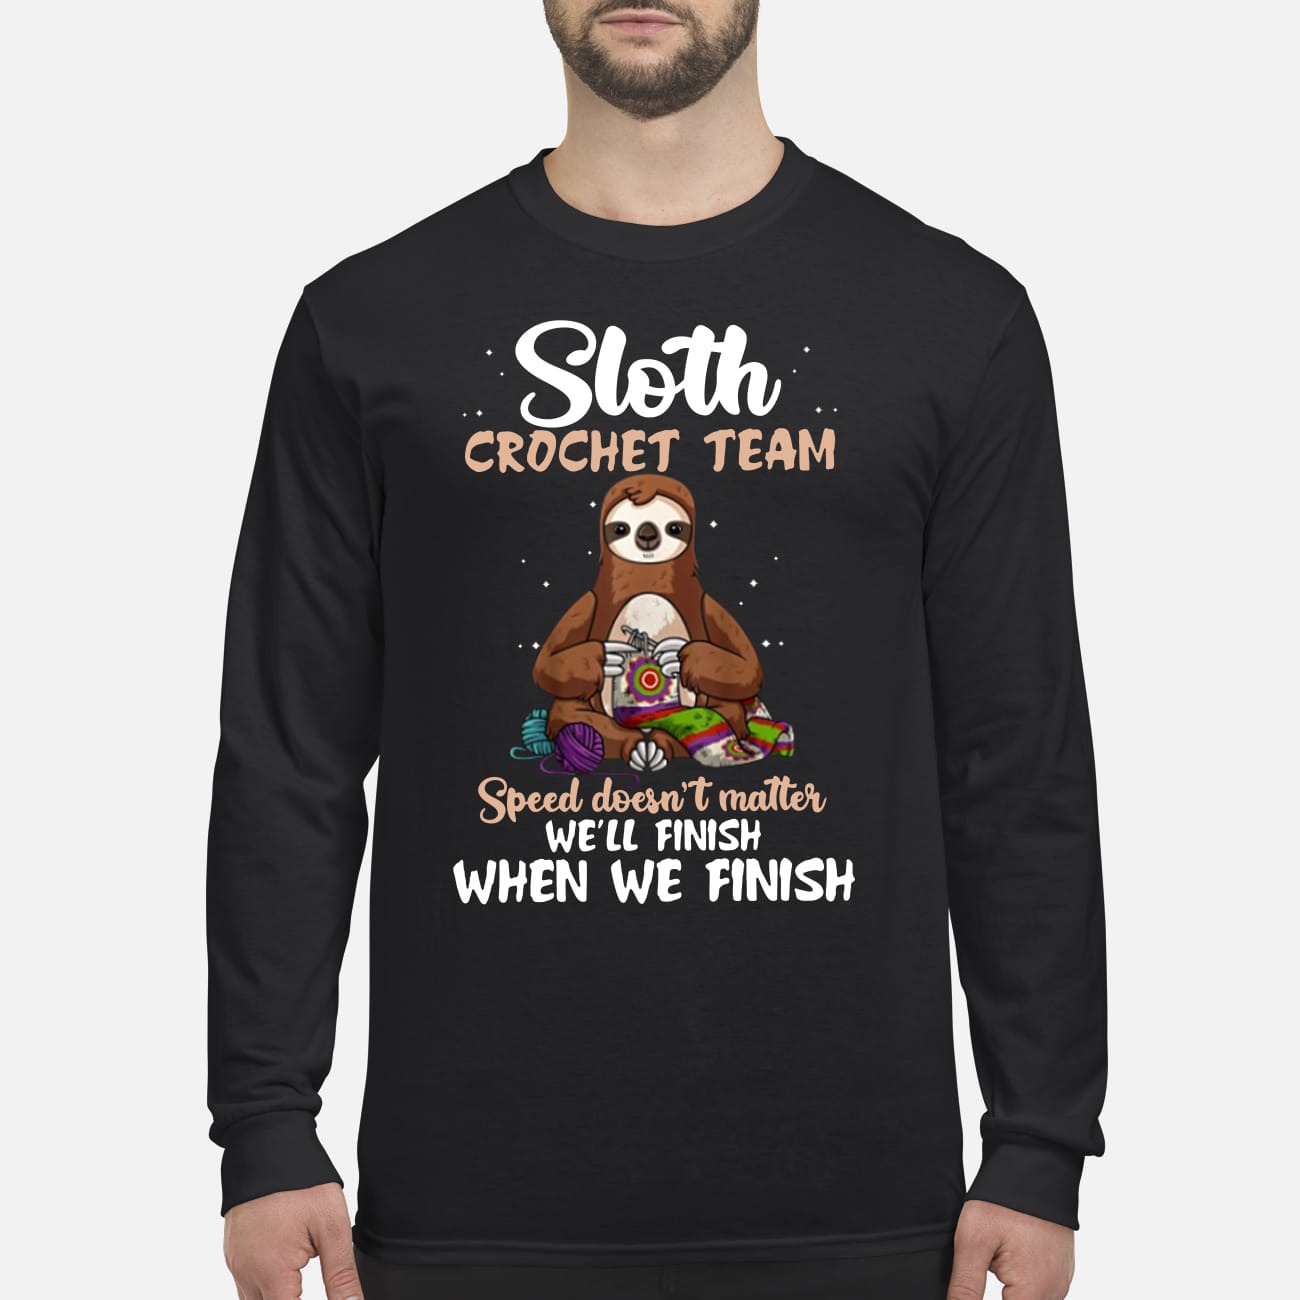 Sloth crochet team speed doesn't matter we'll finish when we finish men's long sleeved shirt